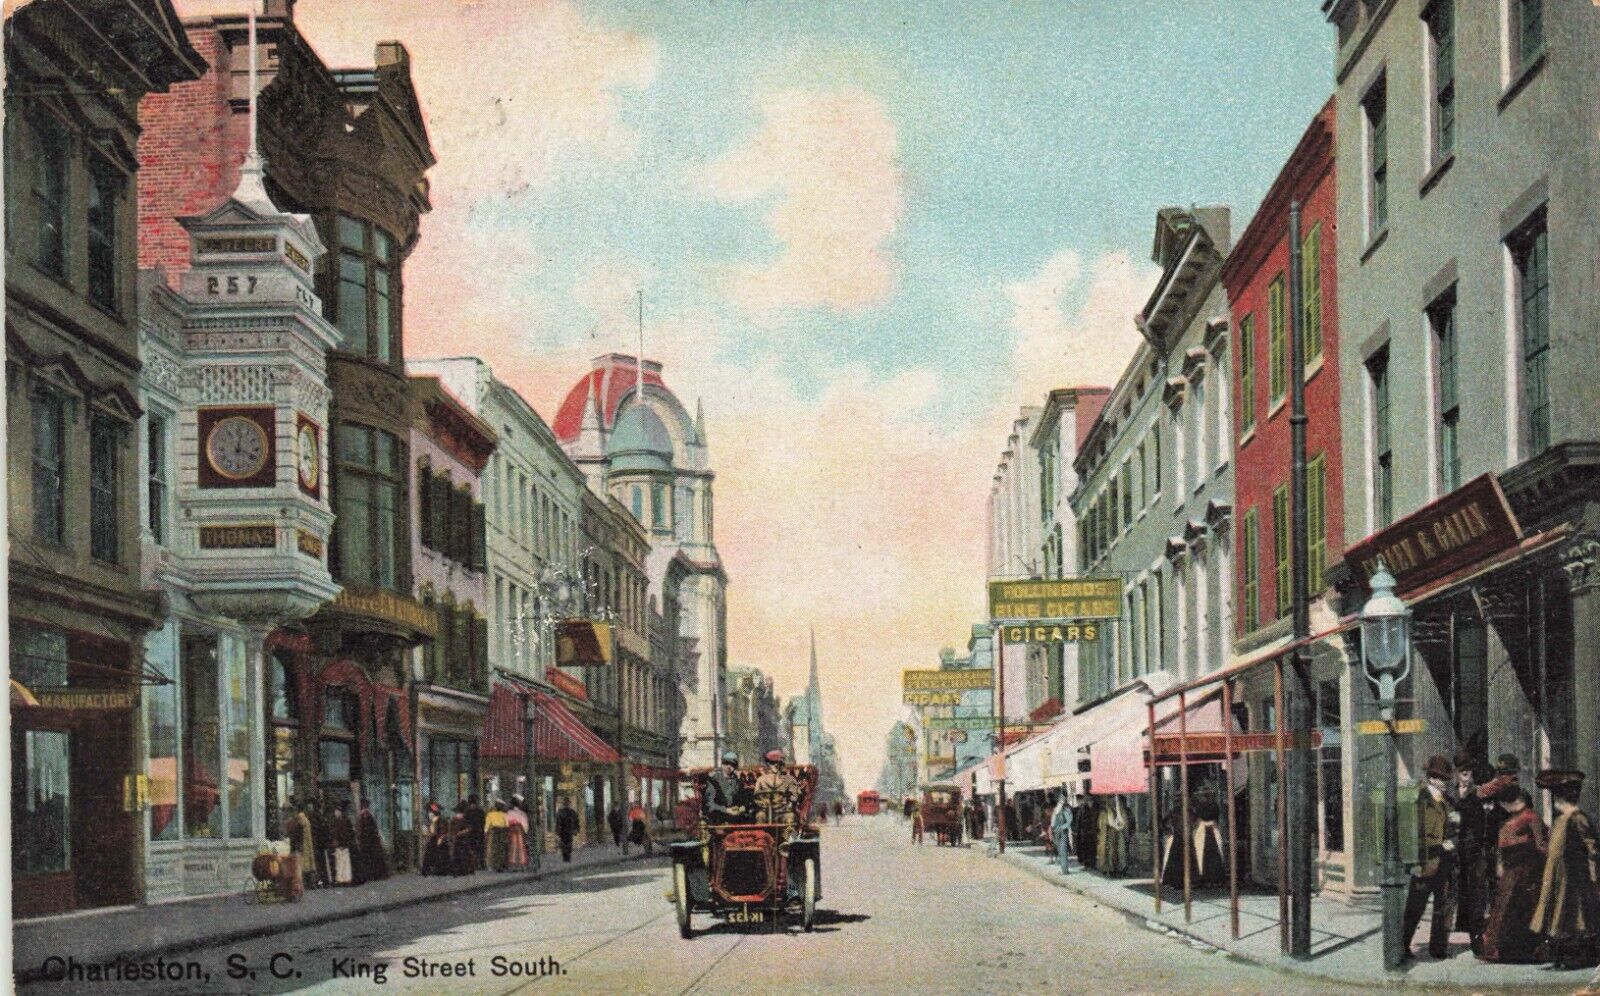 SC-Charleston, South Carolina-View on King Street-Old Car 1908.